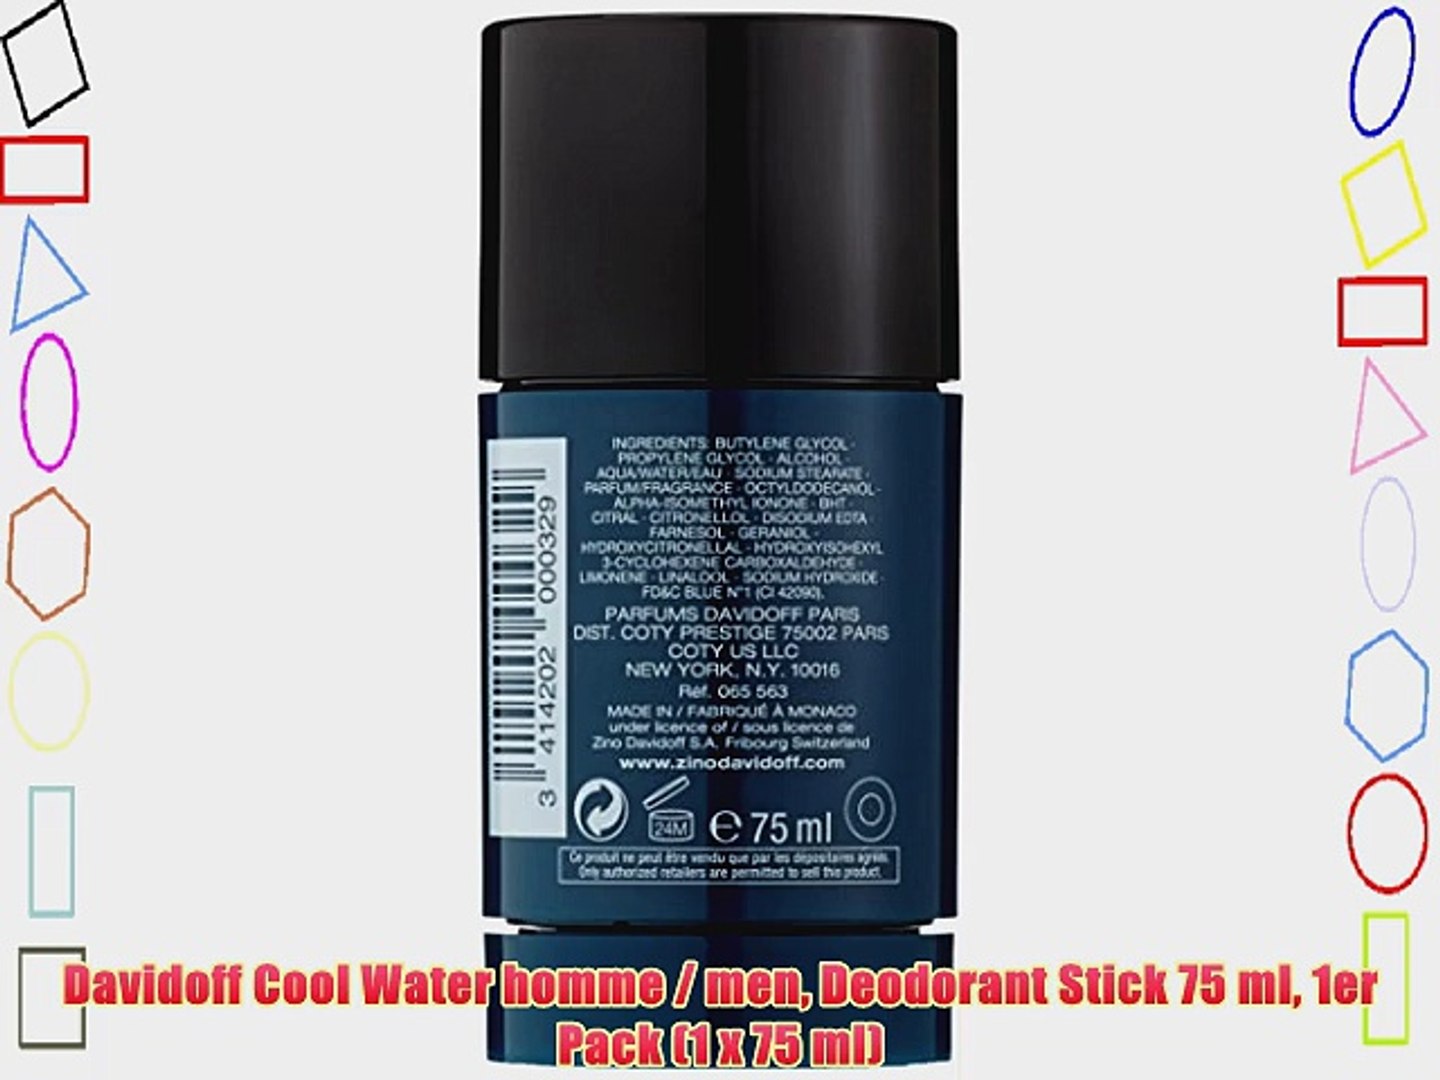 Davidoff Cool Water homme / men Deodorant Stick 75 ml 1er Pack (1 x 75 ml)  - video Dailymotion